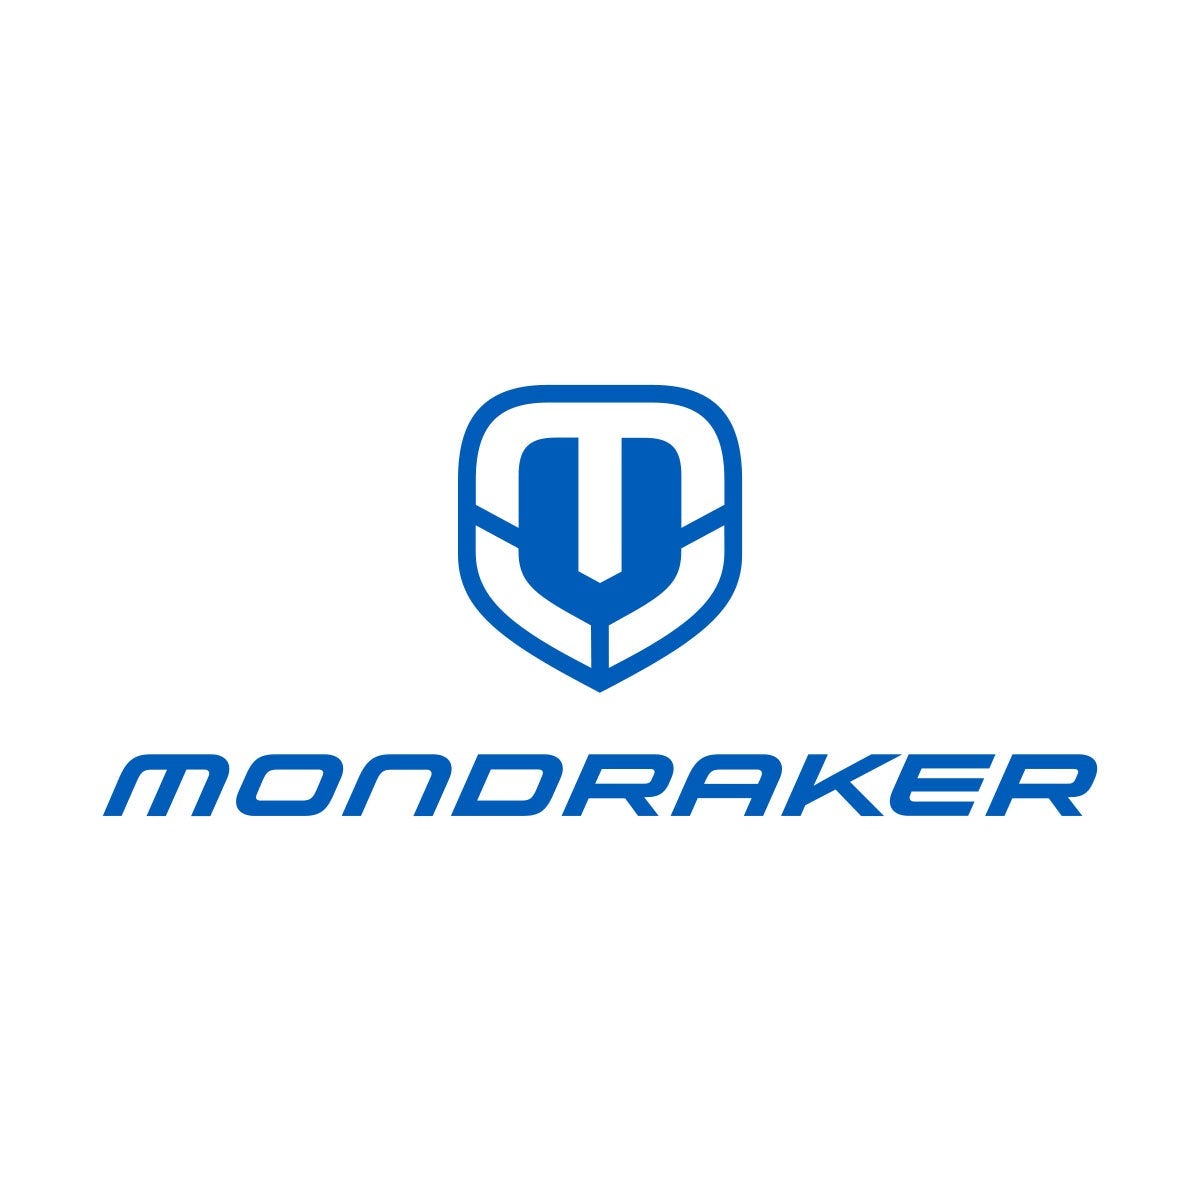 Mondraker Part# 099.21055 - BATTERY COVER ORANGE GLOSS YS 7933 CRAFTY SE 2021